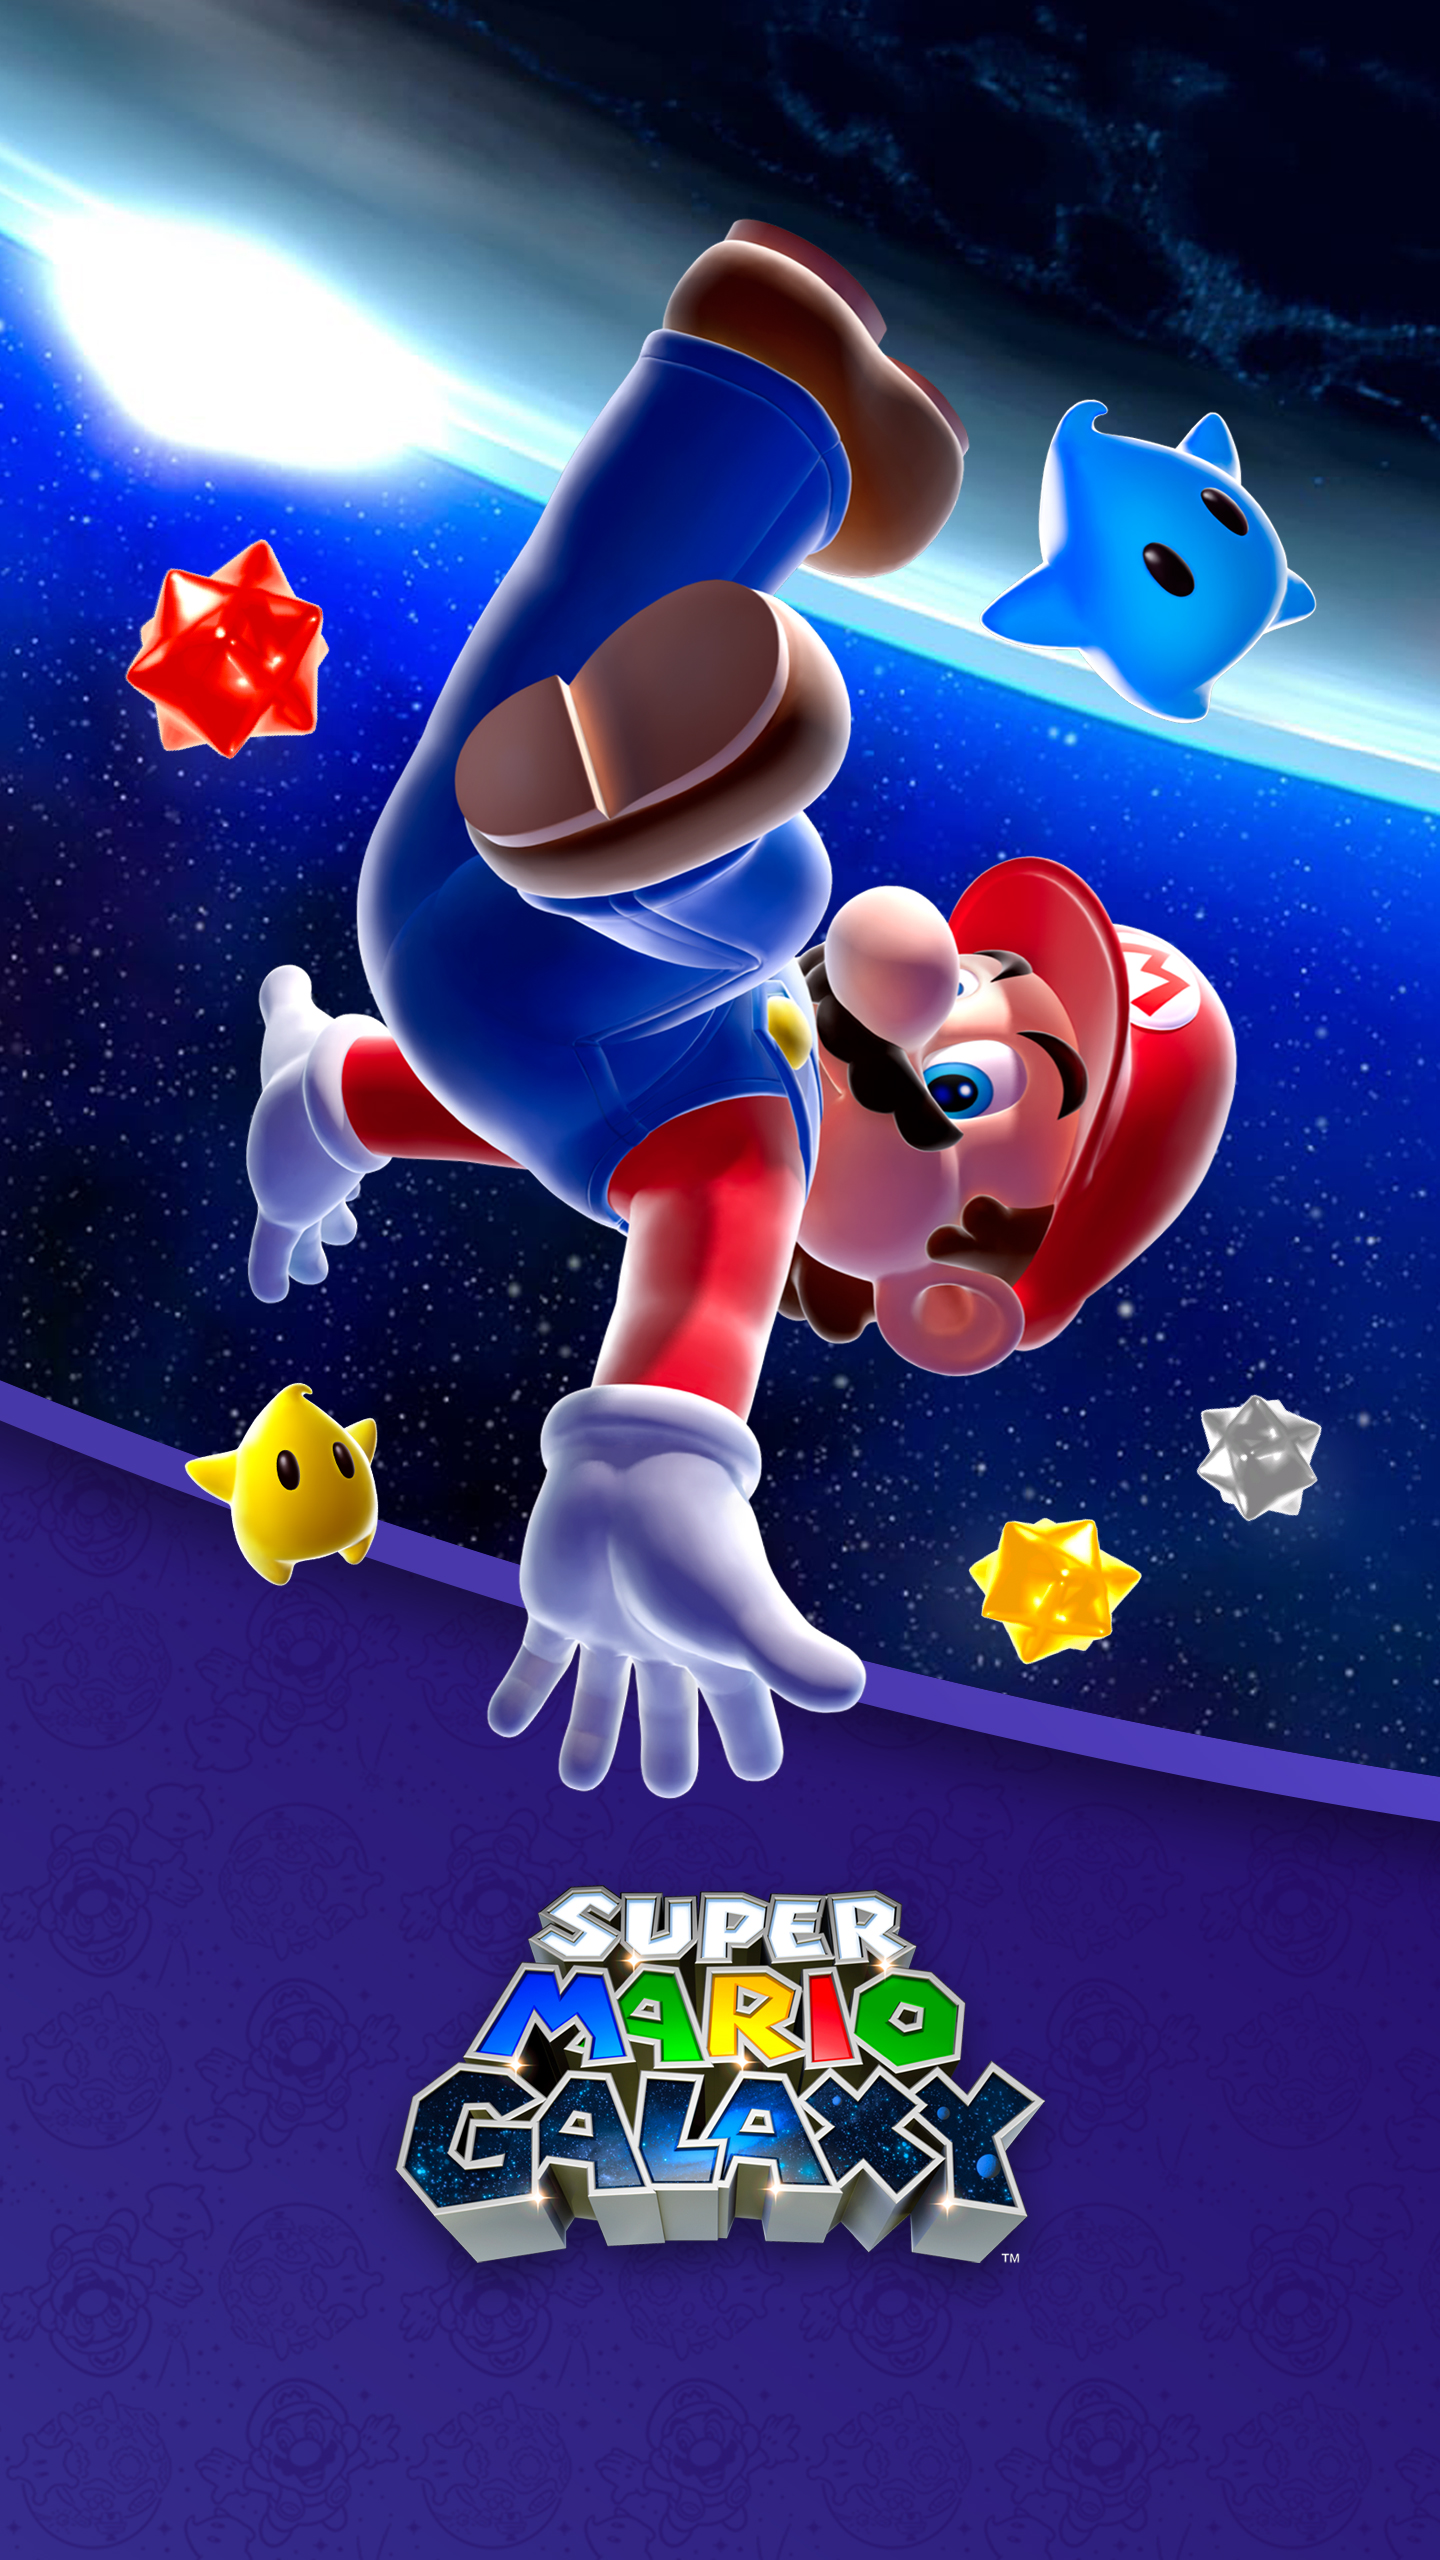 Super Mario 3D All-Stars - Super Mario Galaxy Wallpaper - Cat with Monocle